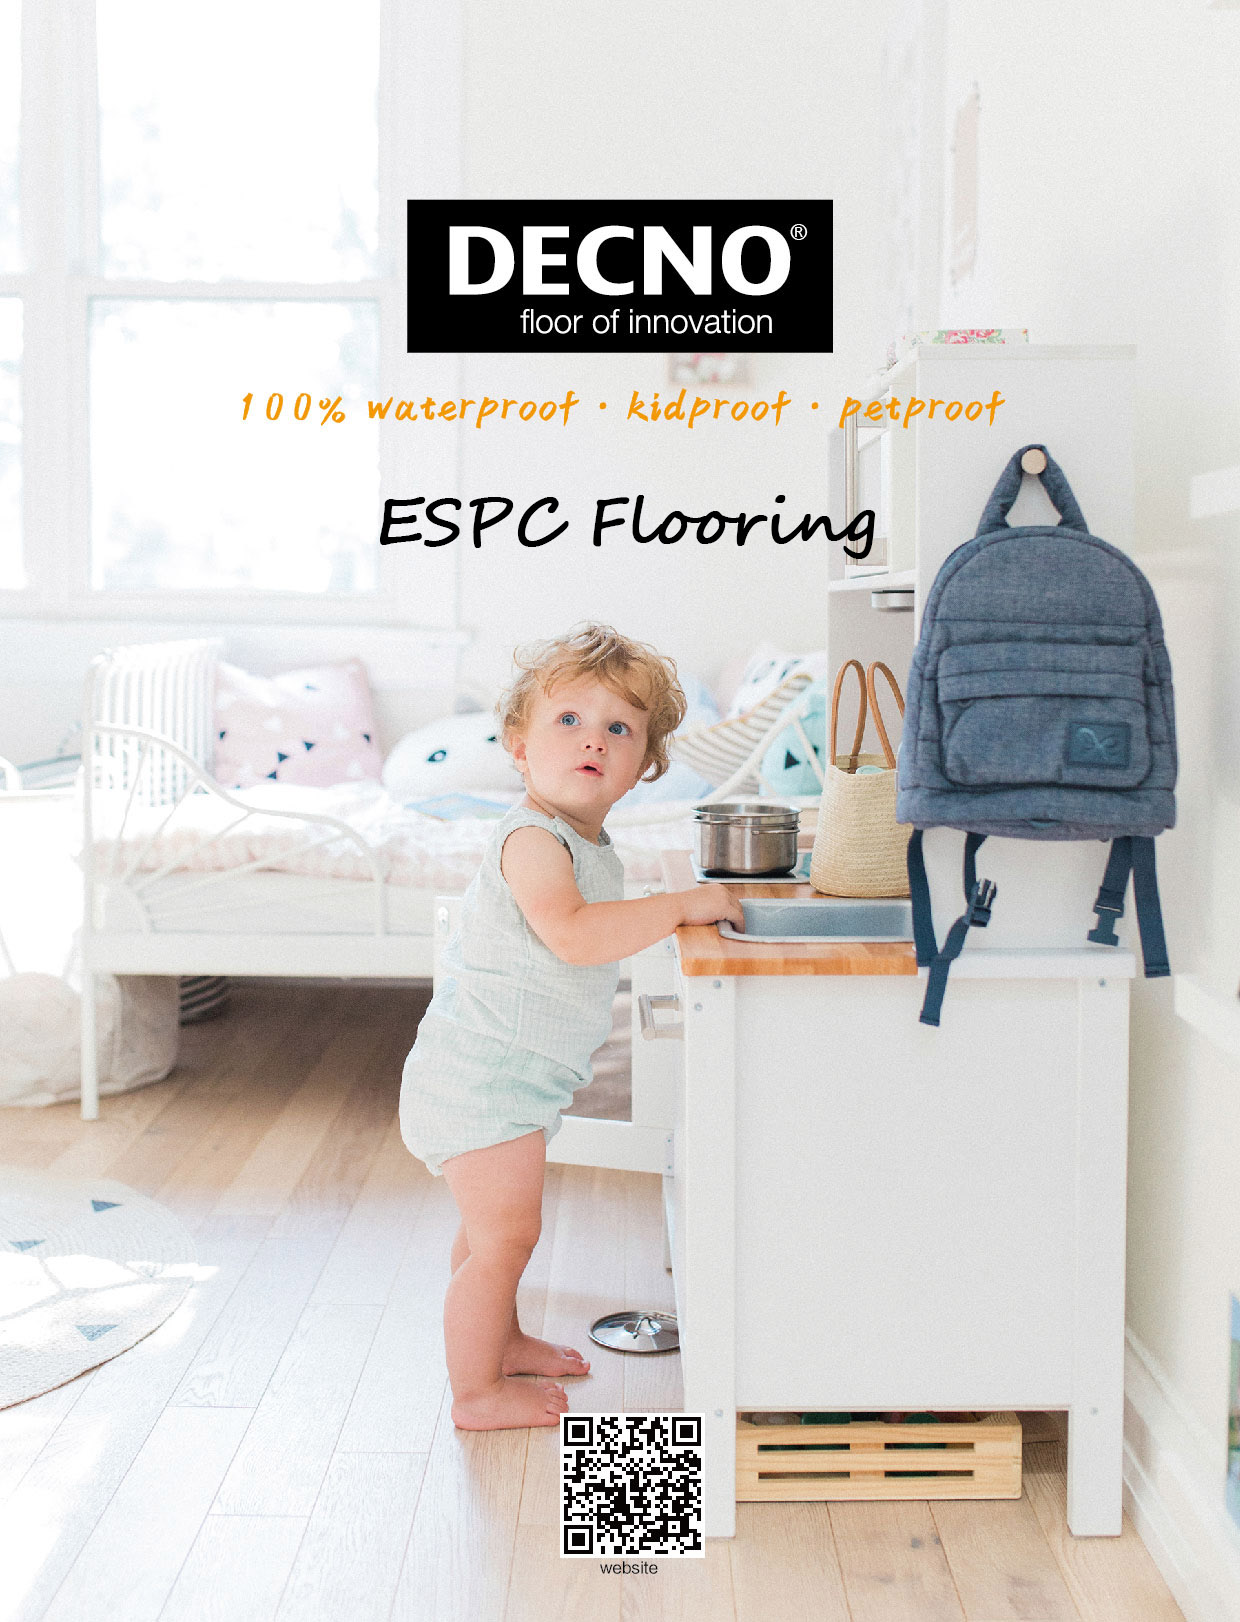 What is ESPC Flooring?cid=17